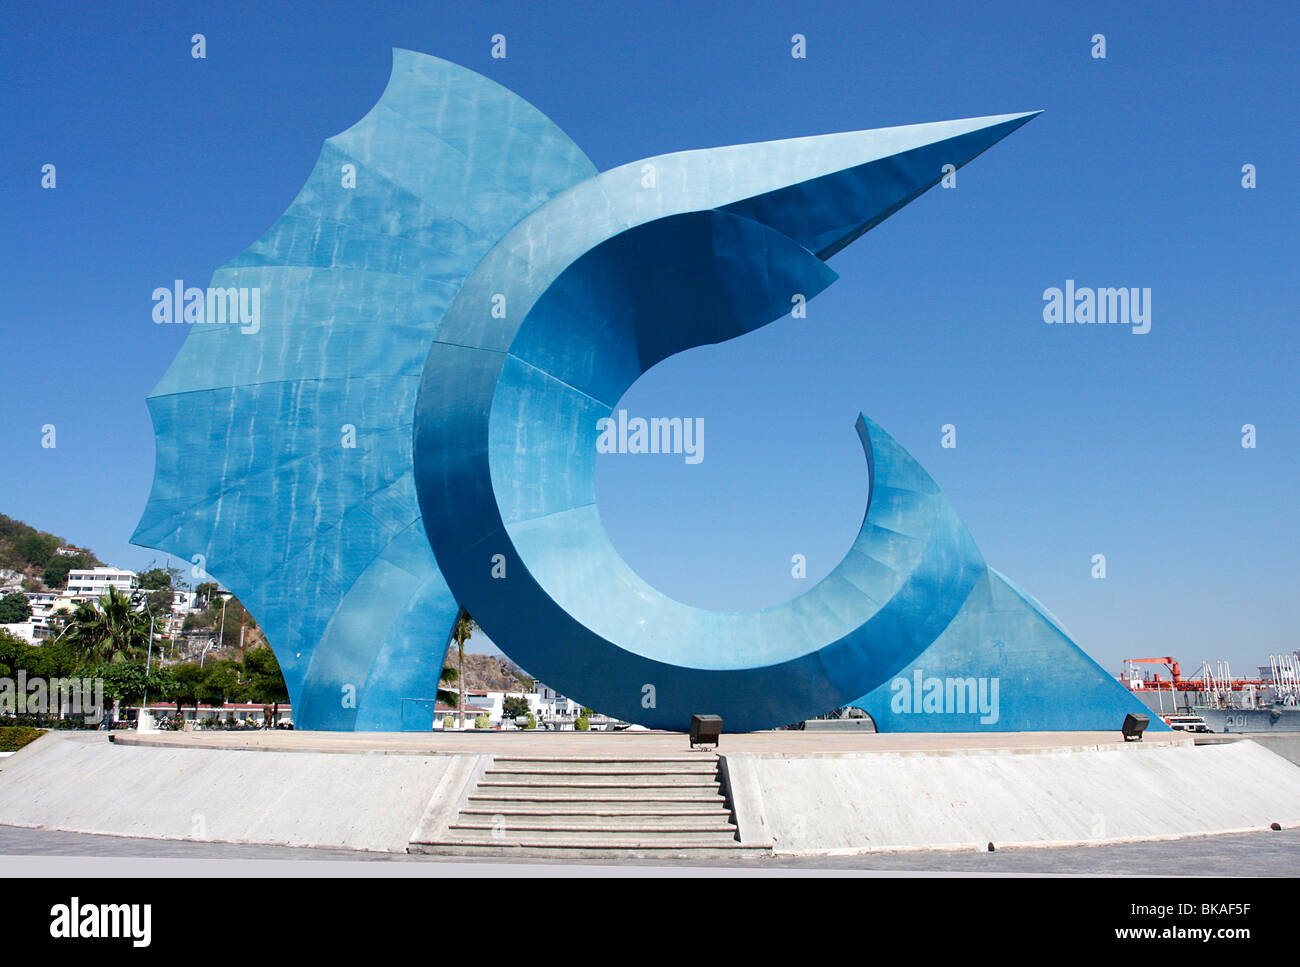 Large sailfish sculpture on the Manzanillo sea front promenade.Popular tourist site. Stock Photo